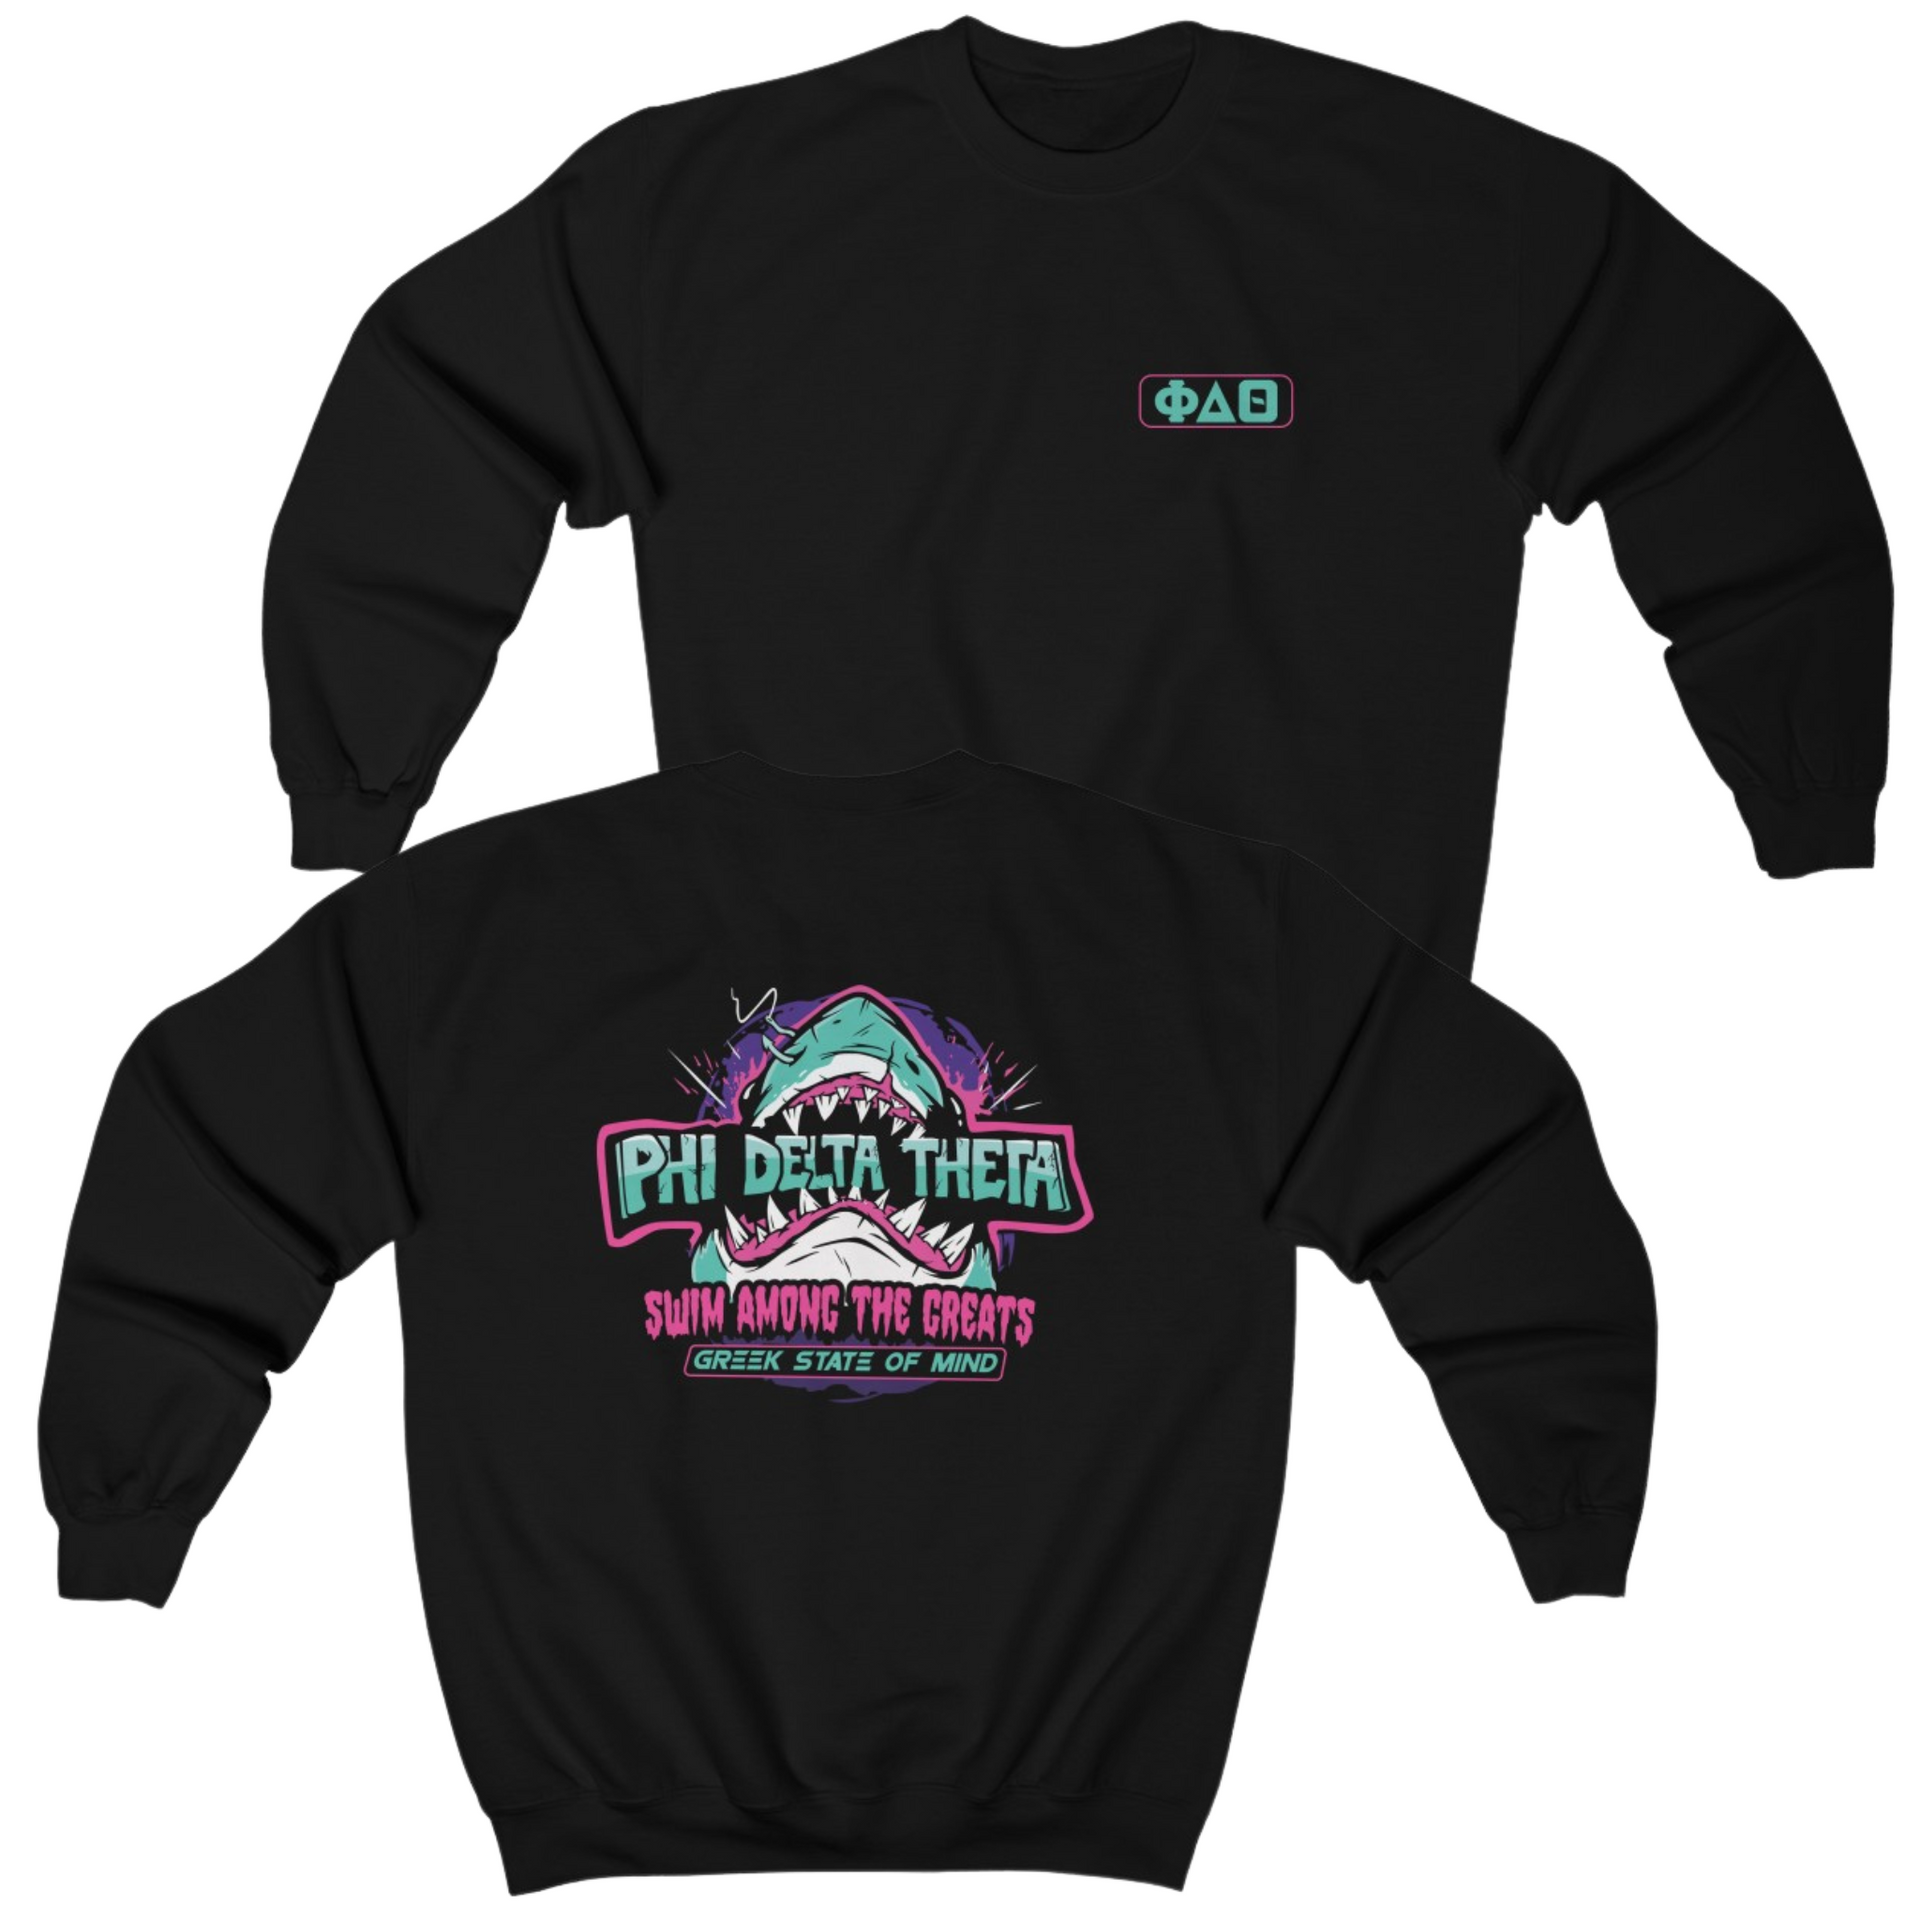 Black Phi Delta Theta Graphic Crewneck Sweatshirt | The Deep End | phi delta theta fraternity greek apparel 